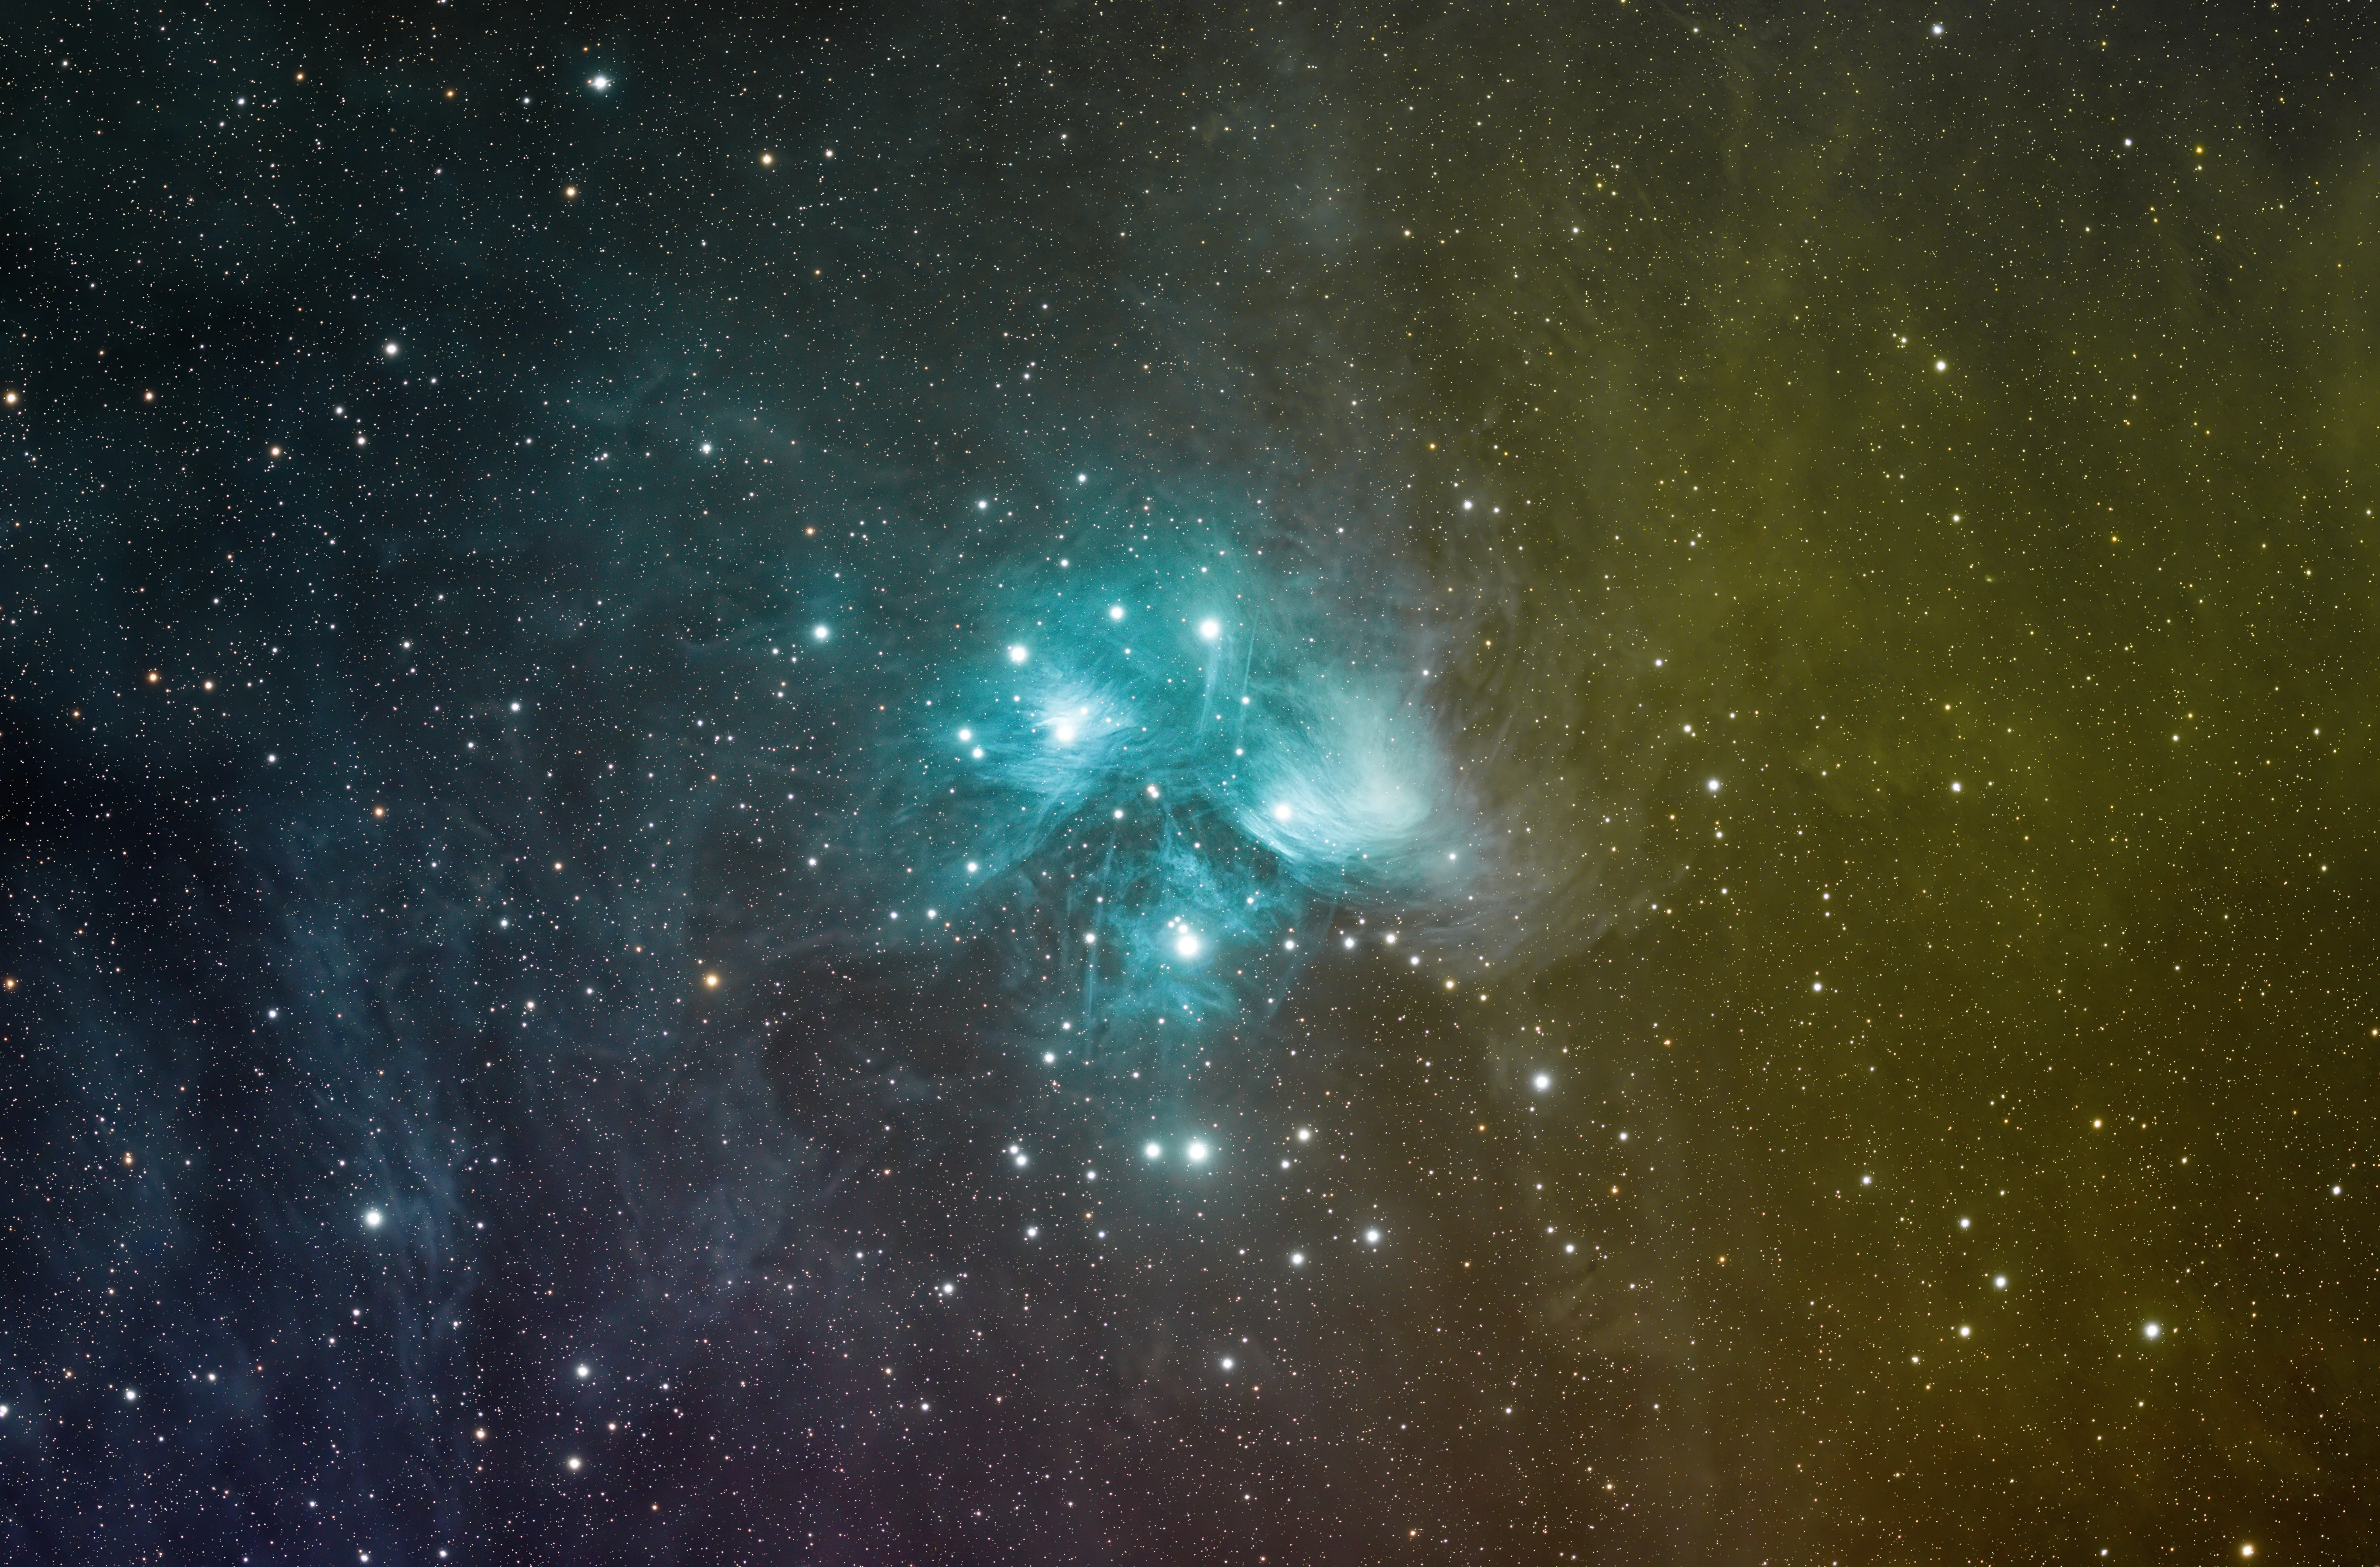 Capturing M45 Pleiades with the Sharpstar 61EDPH III refractor